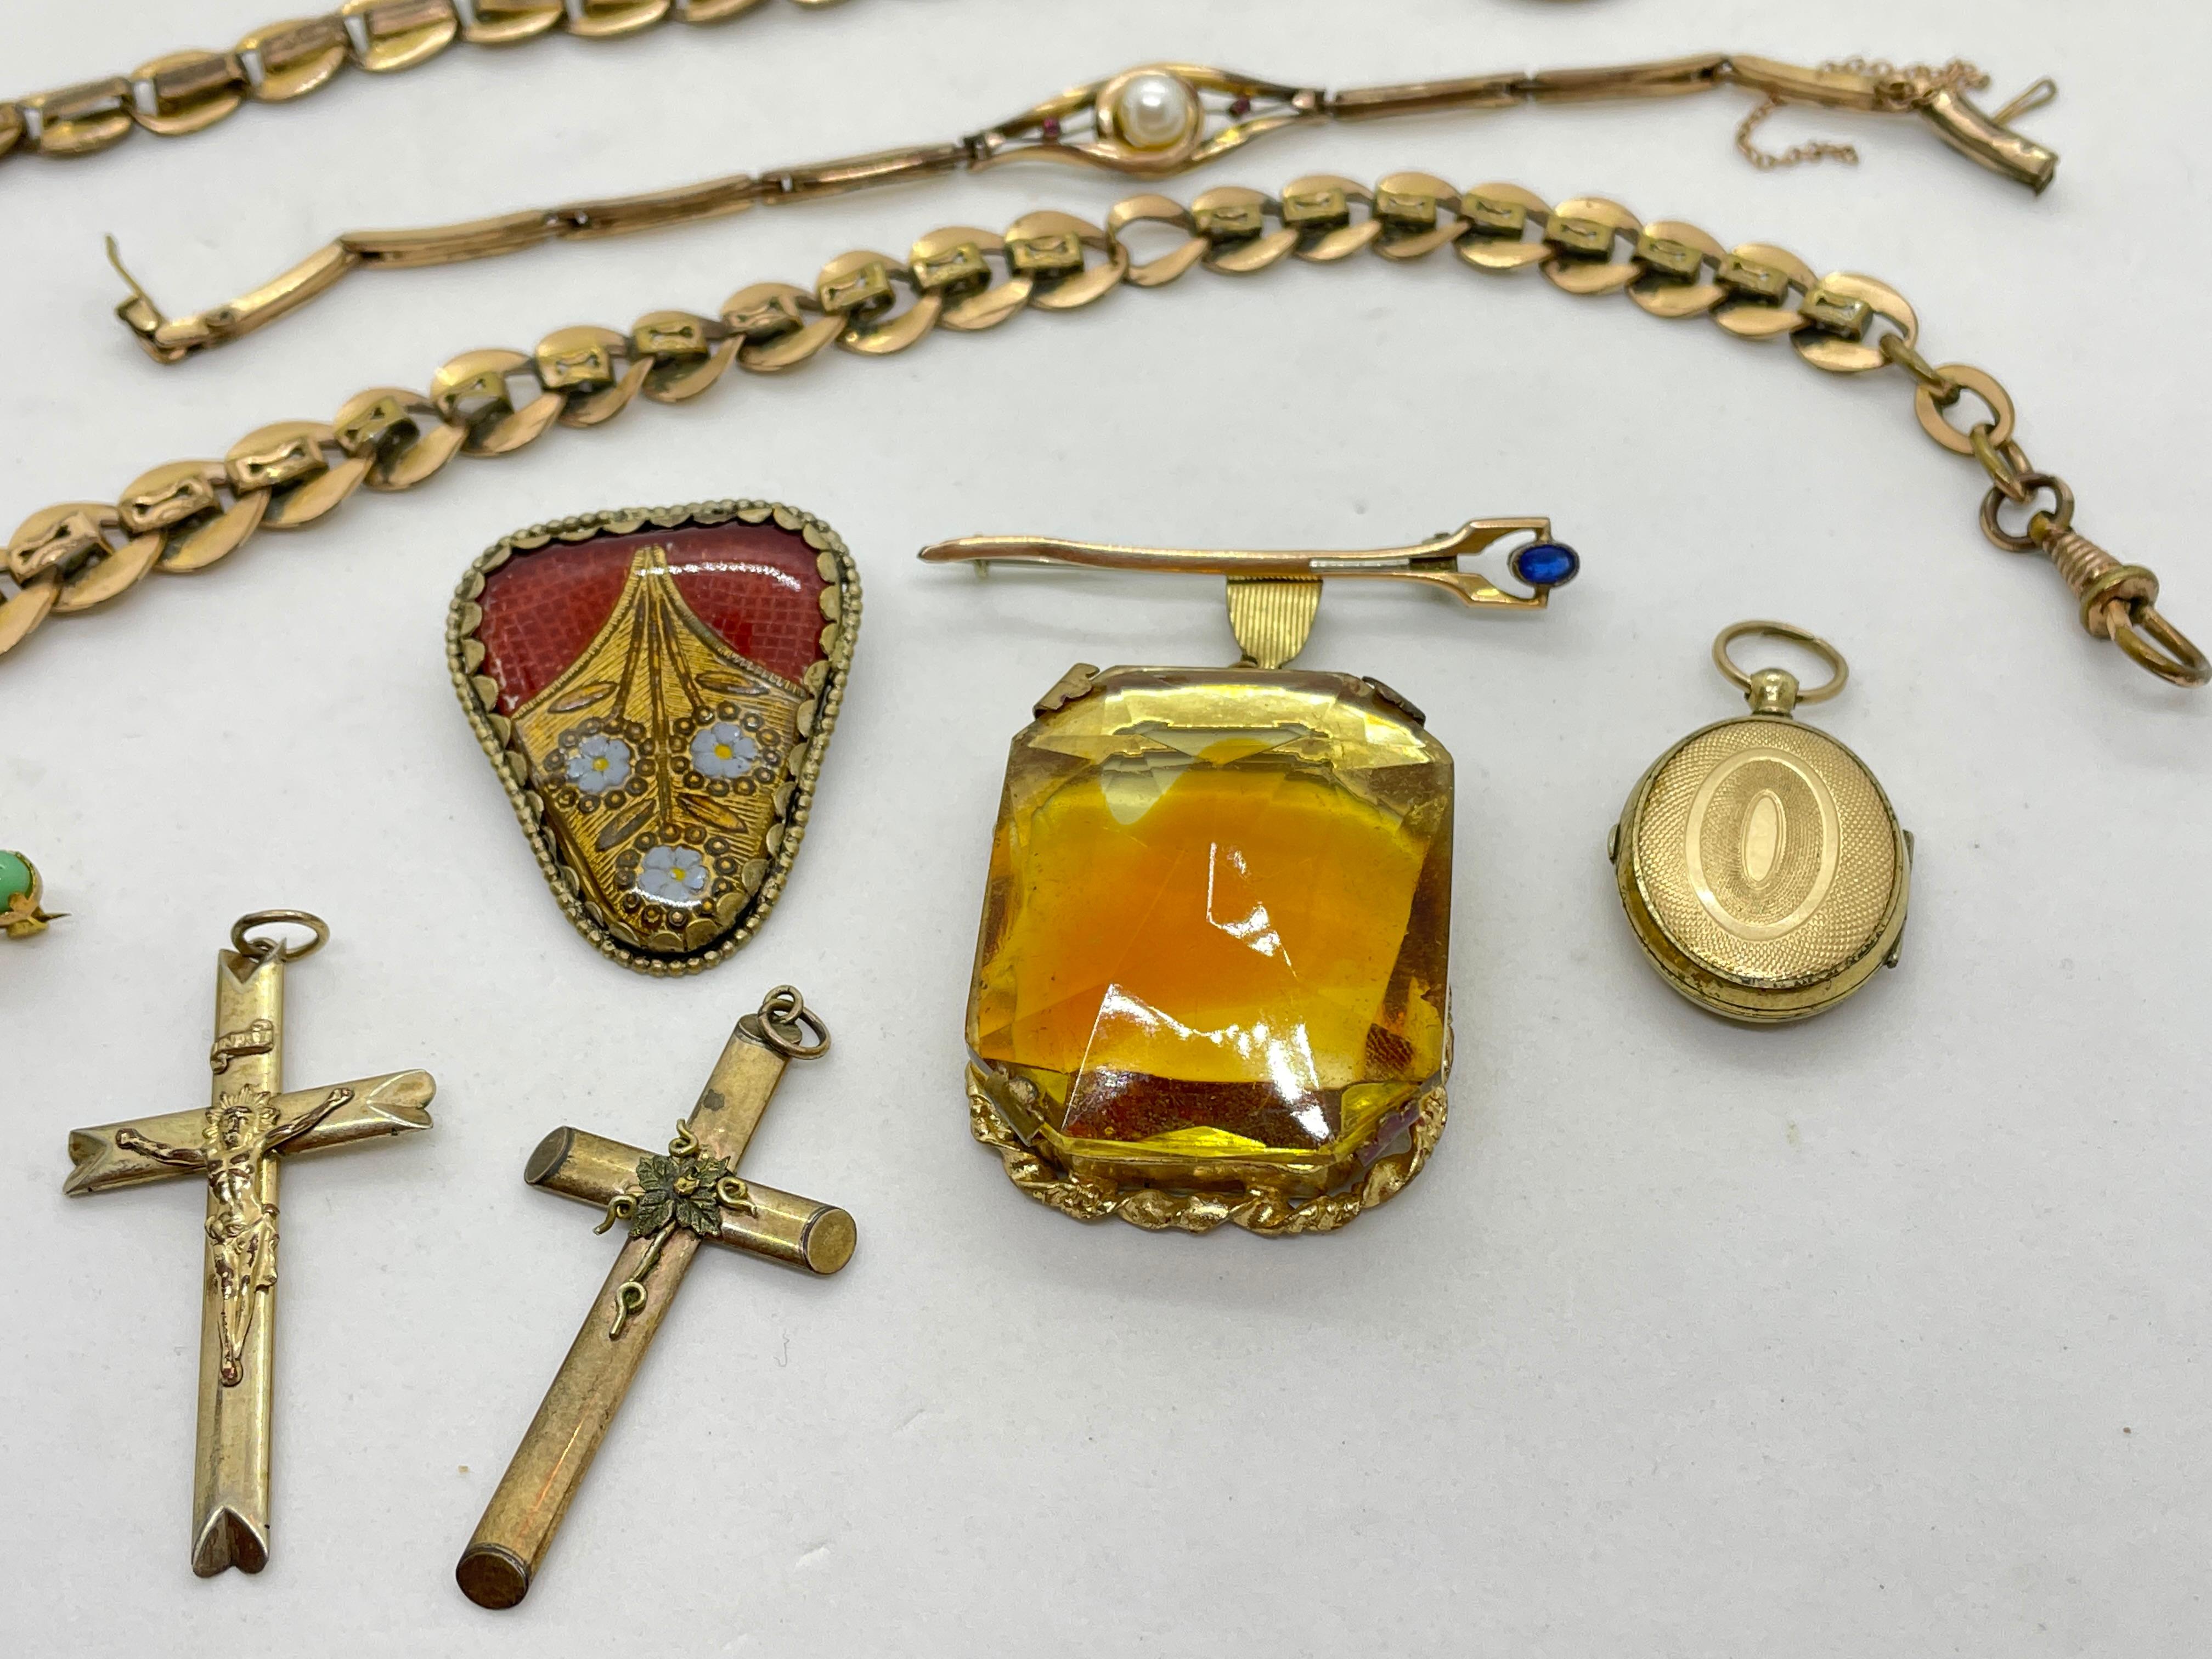 Ormolu Collection Antique German Art Nouveau Jewelry Brooch Watch Chain Pendants 1900s For Sale